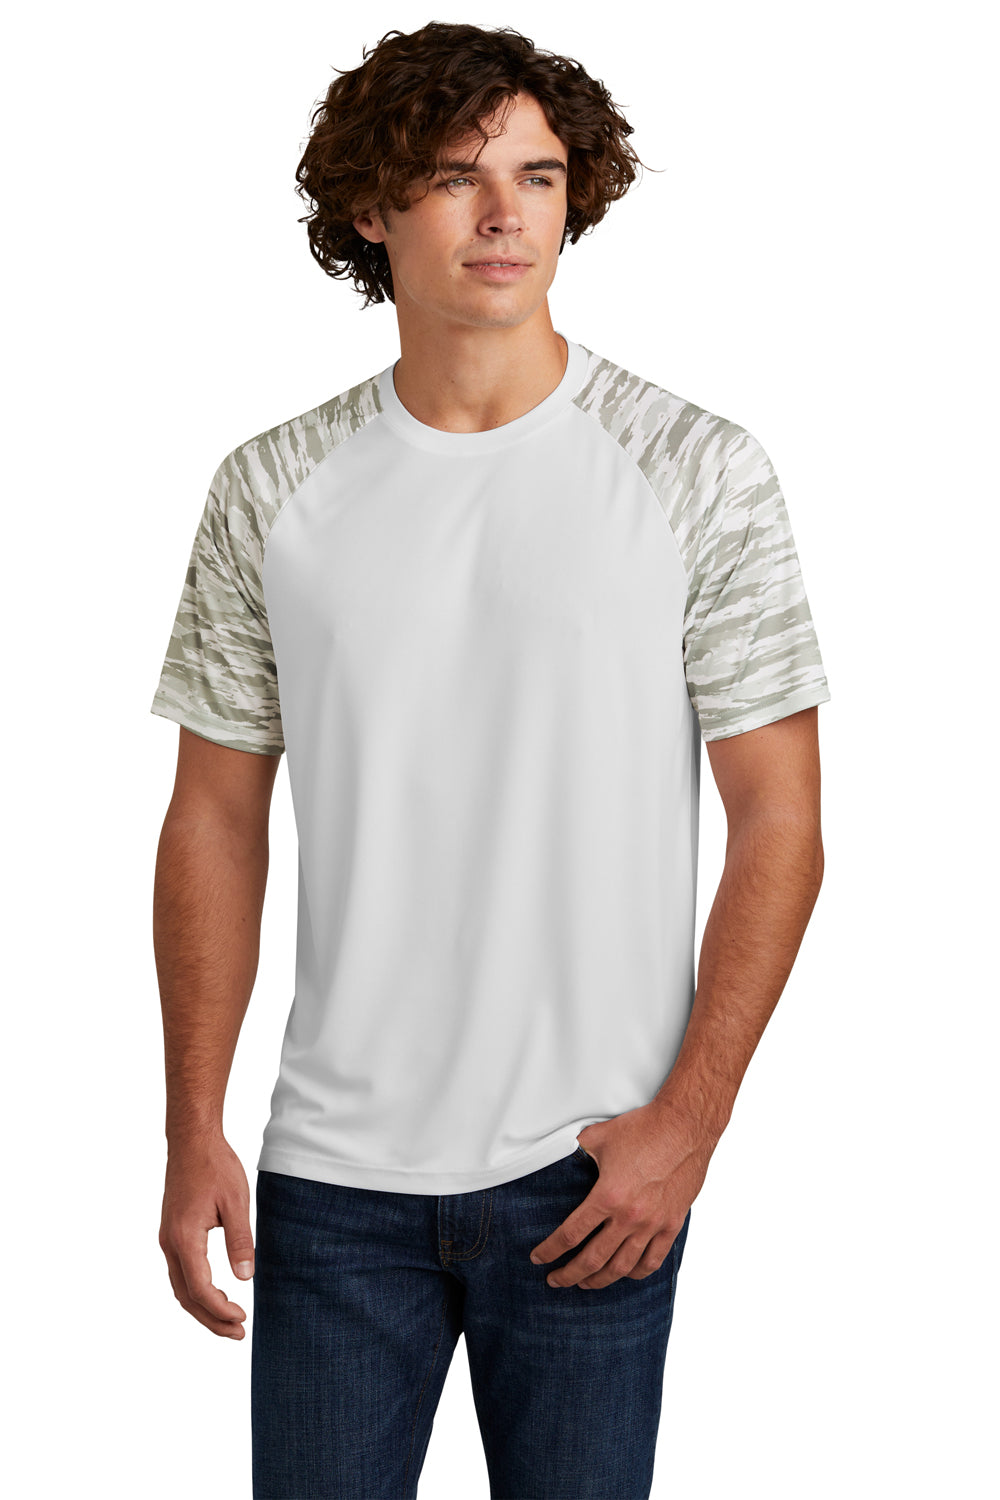 Sport-Tek Mens Drift Camo Colorblock Short Sleeve Crewneck T-Shirt White Front